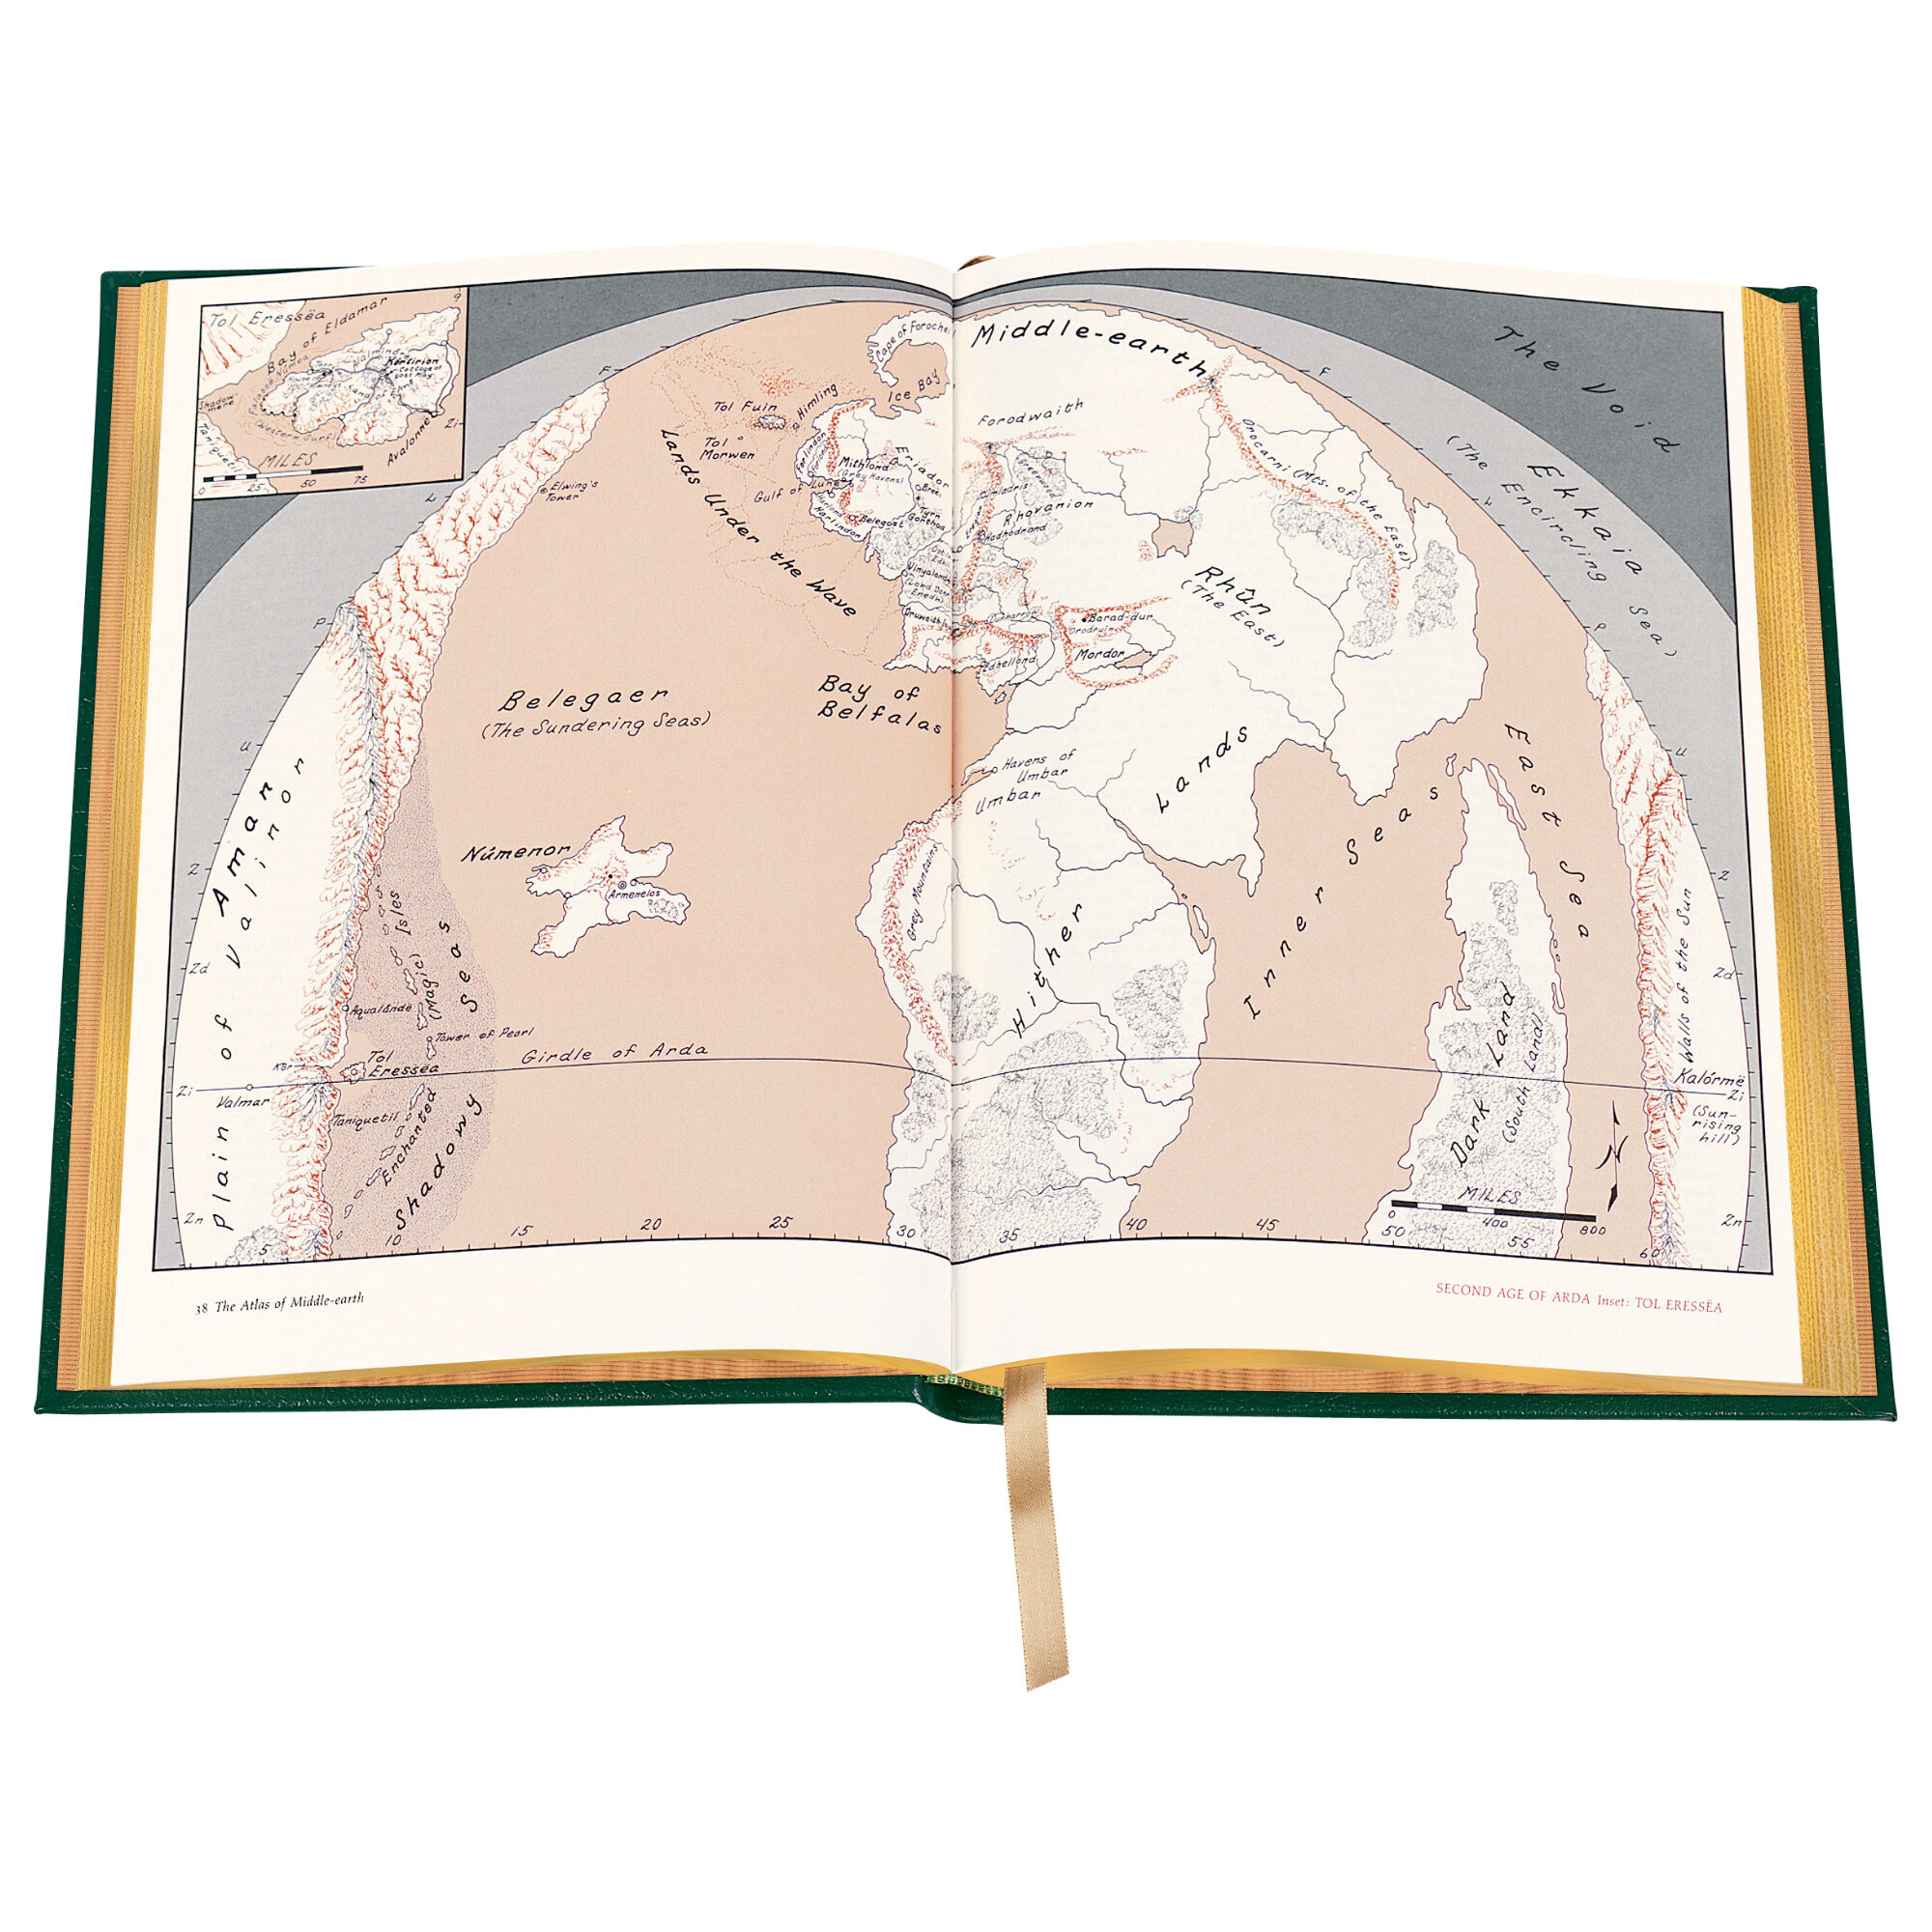 Middle earth Atlas 1035 c sp01